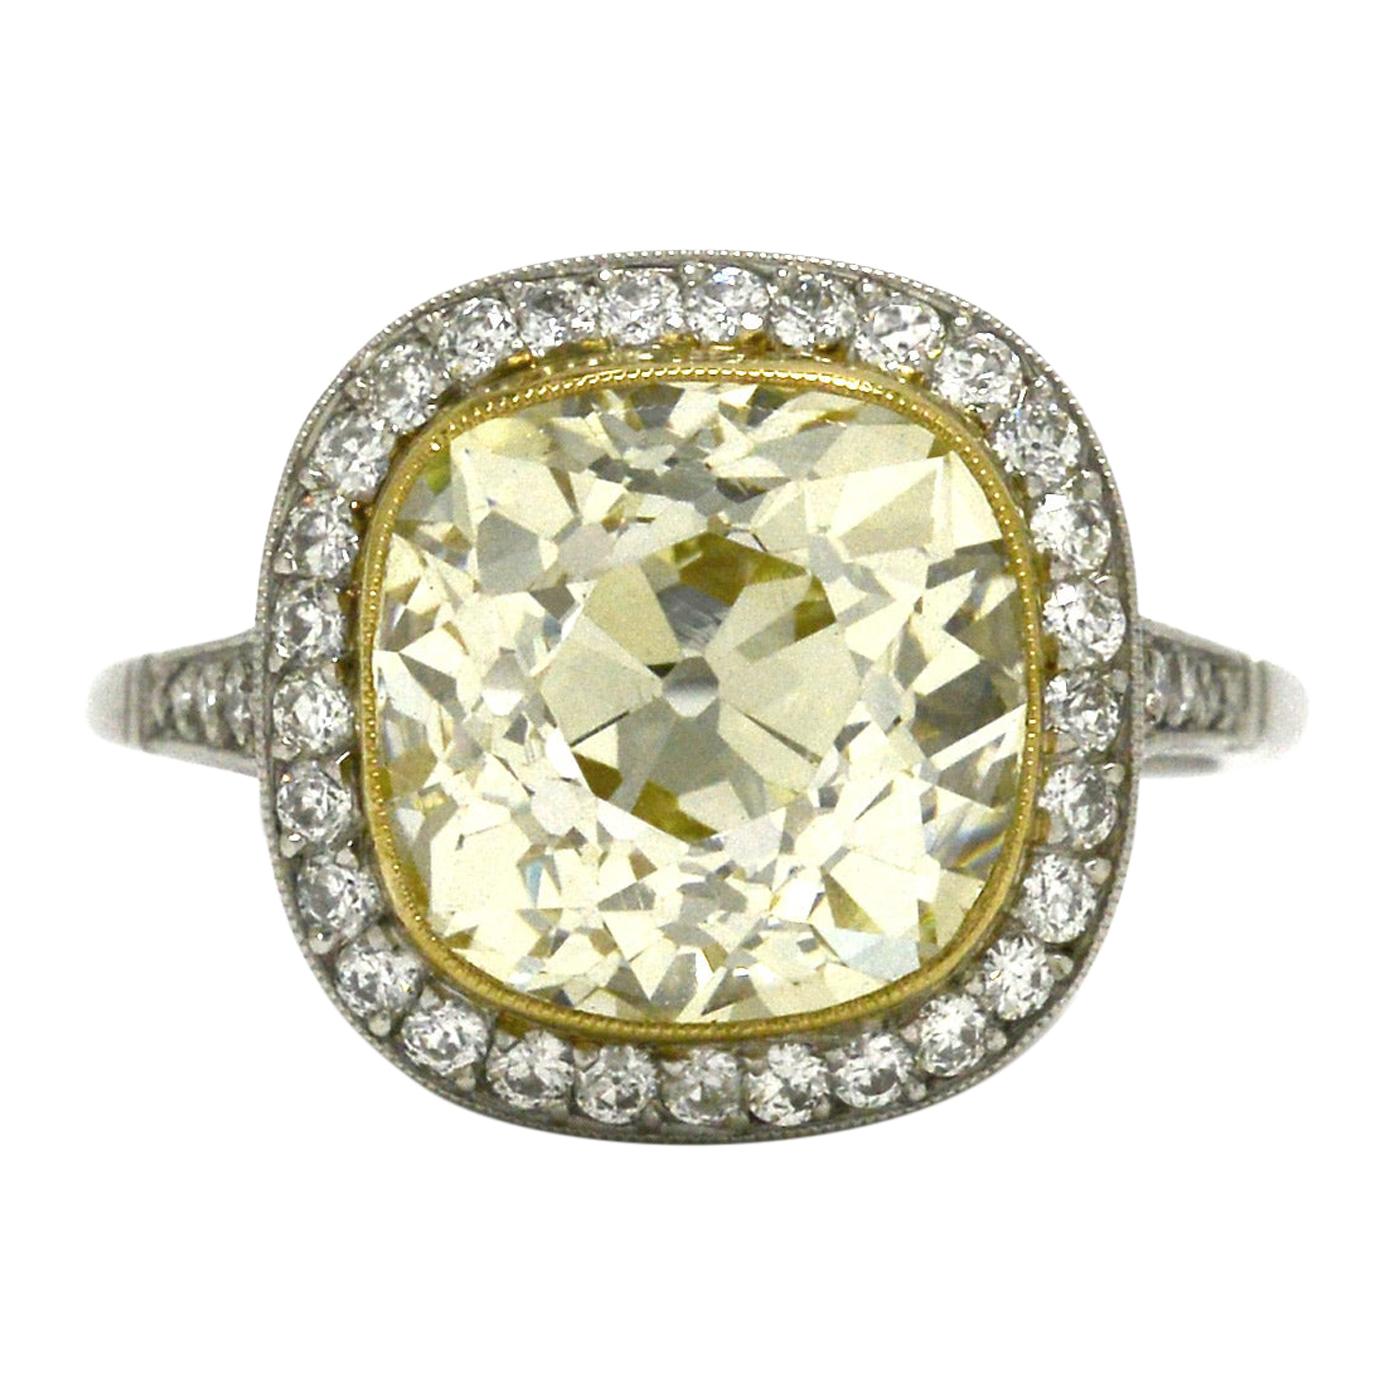 5.50 Carat Antique Yellow Diamond Engagement Ring Old Mine Cut Edwardian Style